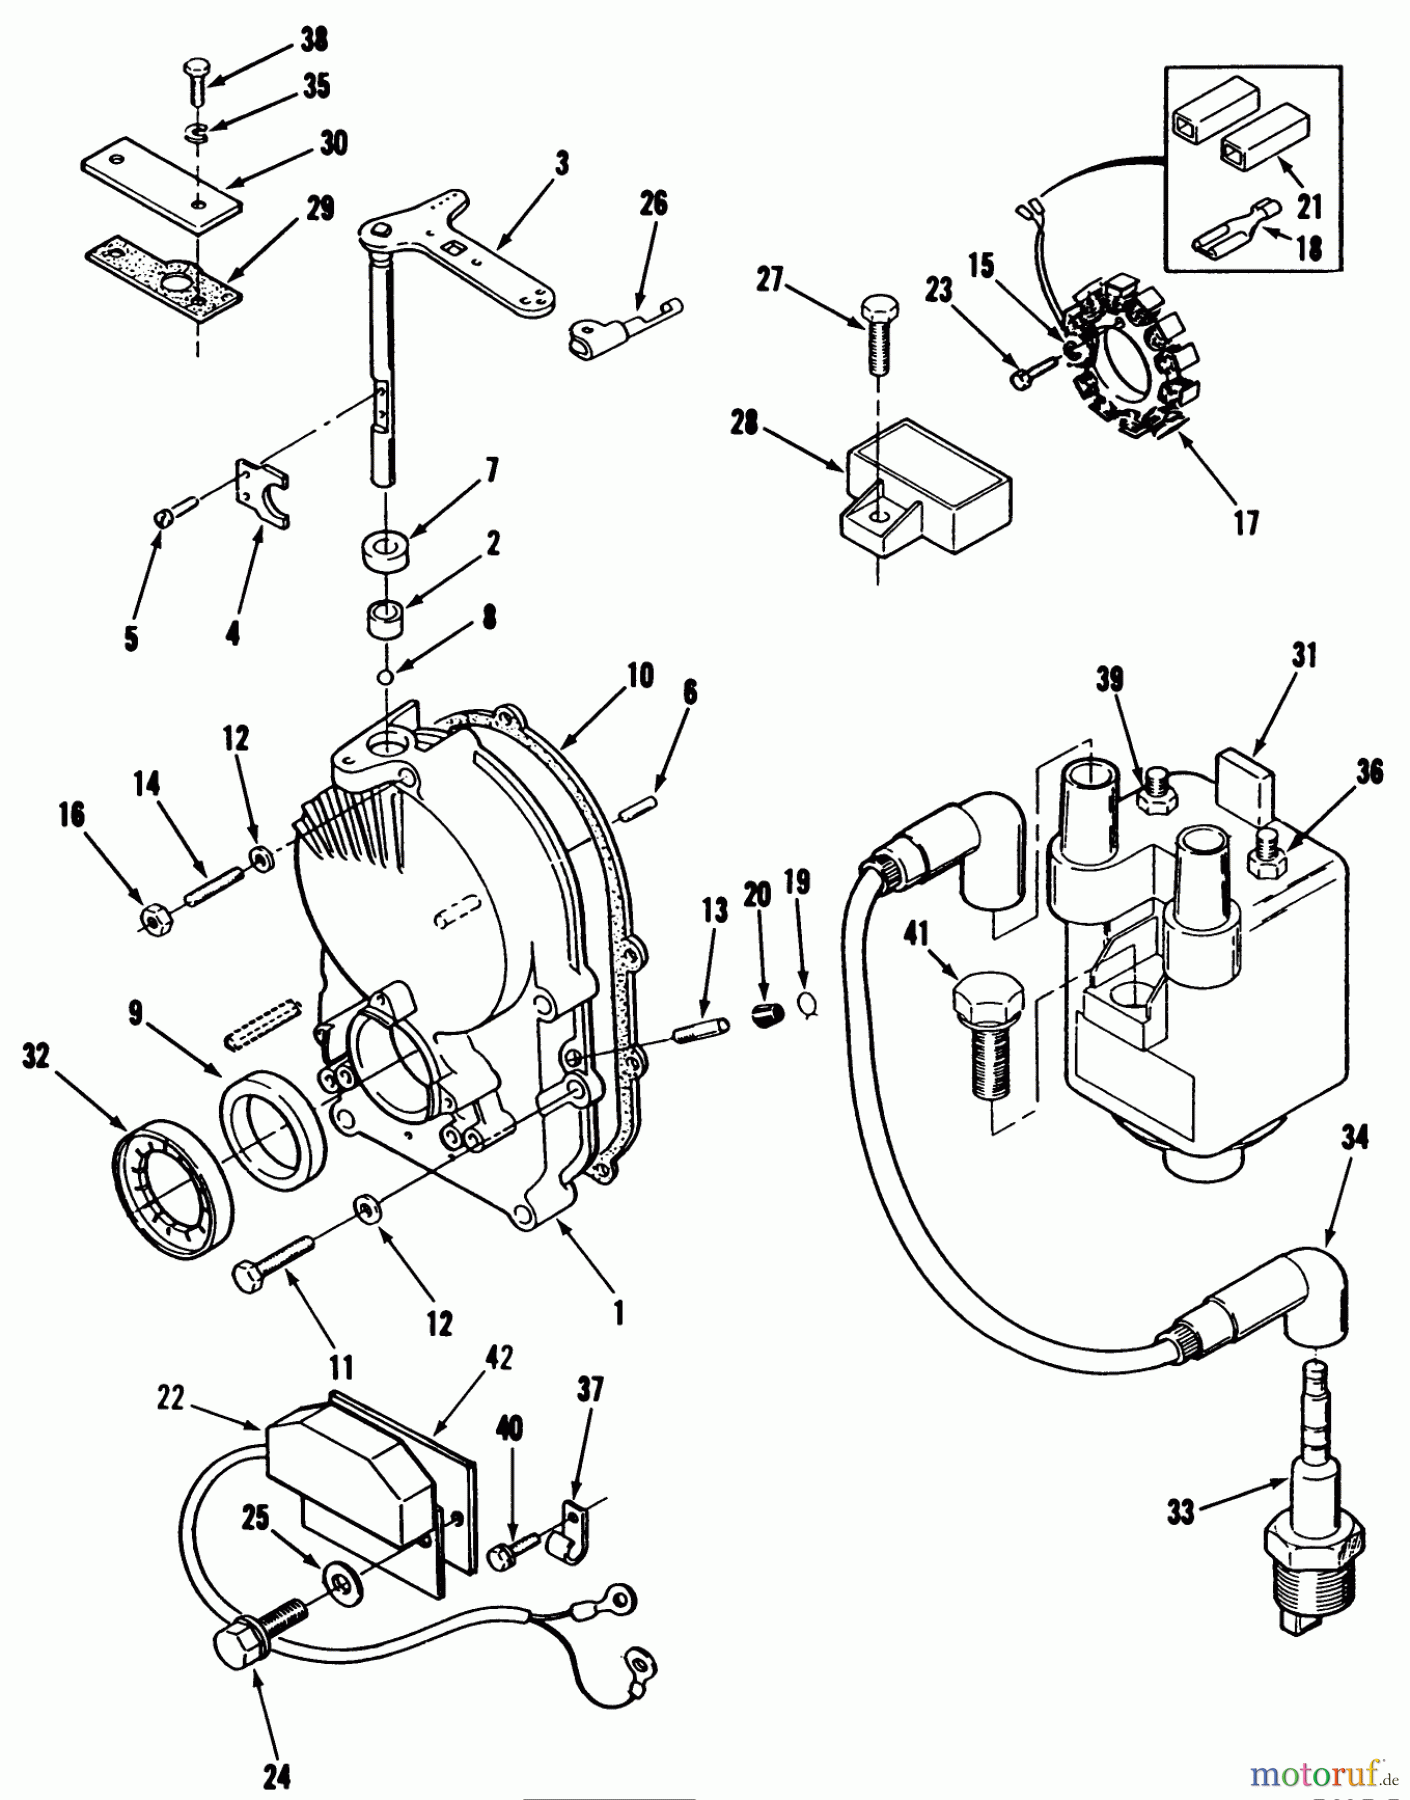  Toro Neu Mowers, Lawn & Garden Tractor Seite 1 51-12KE01 (312-H) - Toro 312-H Garden Tractor, 1991 (1000001-1999999) GEARCASE AND IGNITION CONTROLS